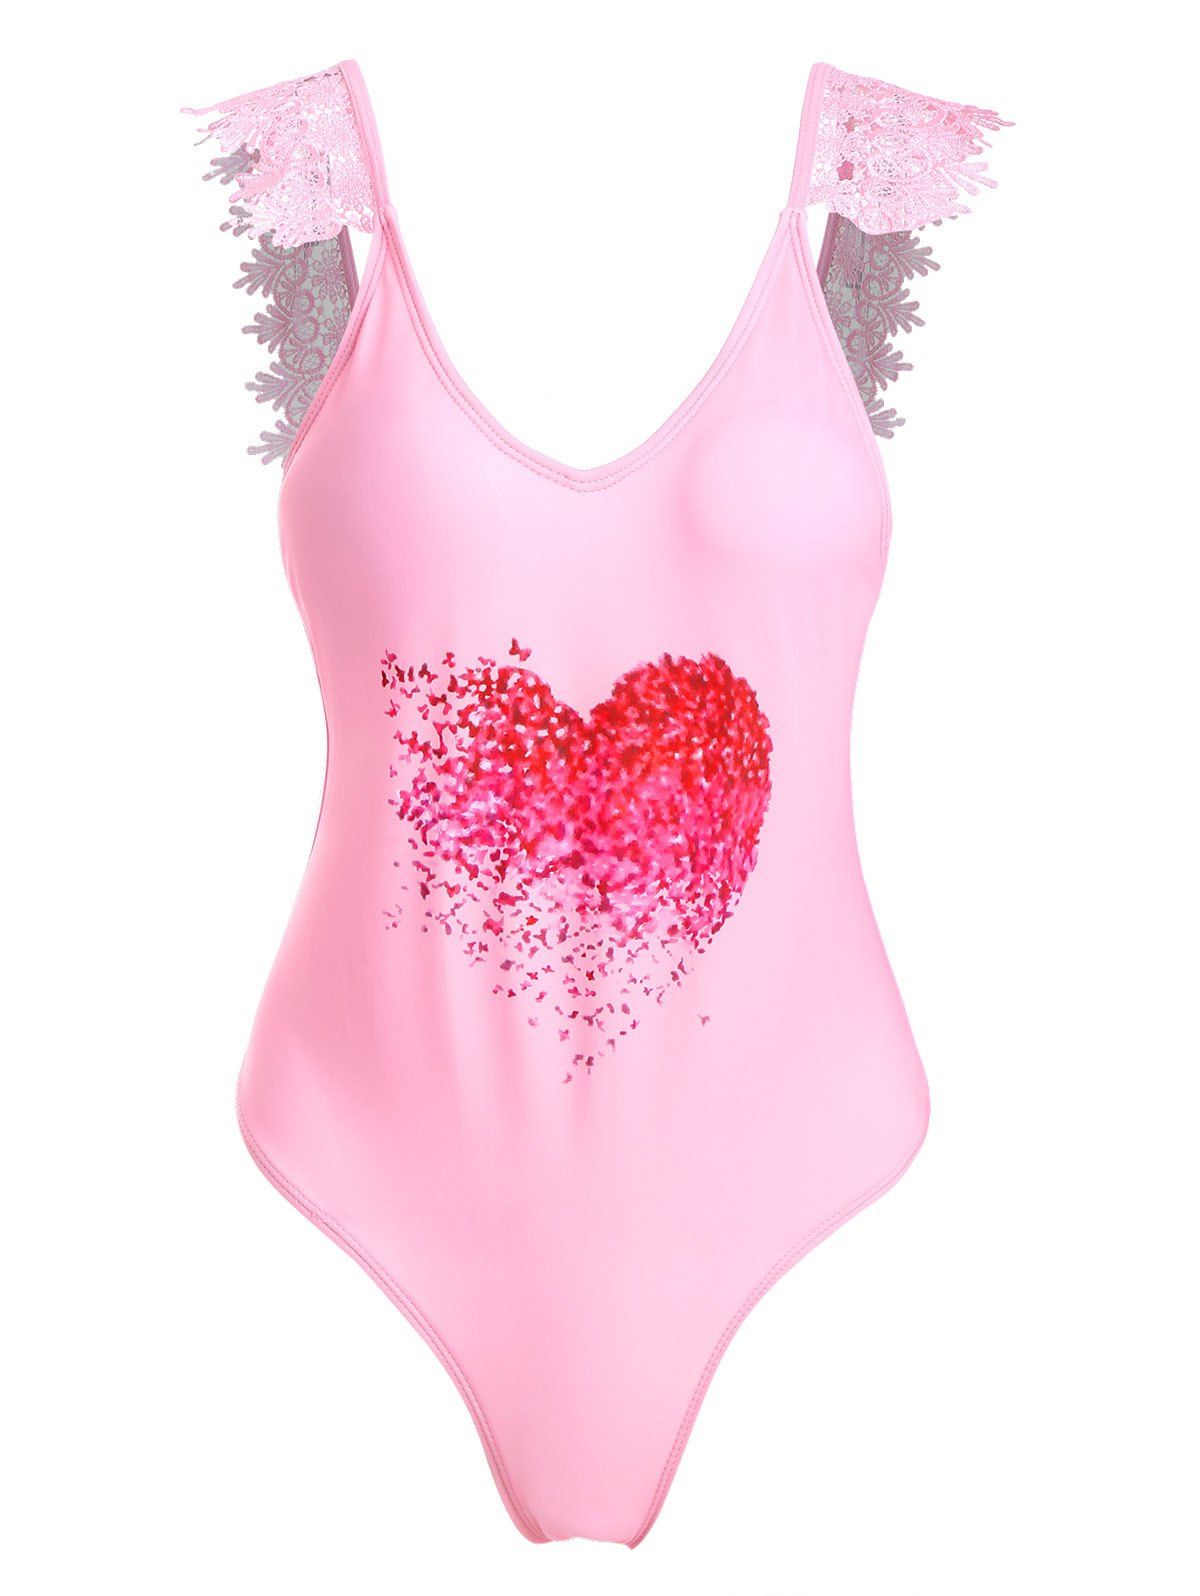 Lace Applique Plunge Backless Valentine Swimsuit - PINK L